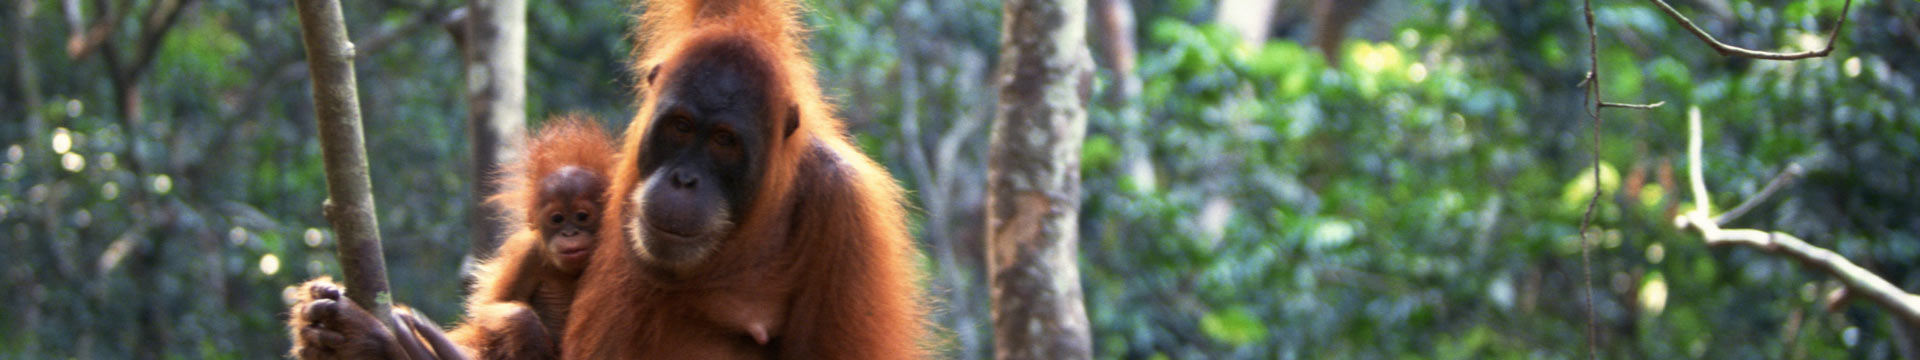 Commitment to Orangutan Conservation